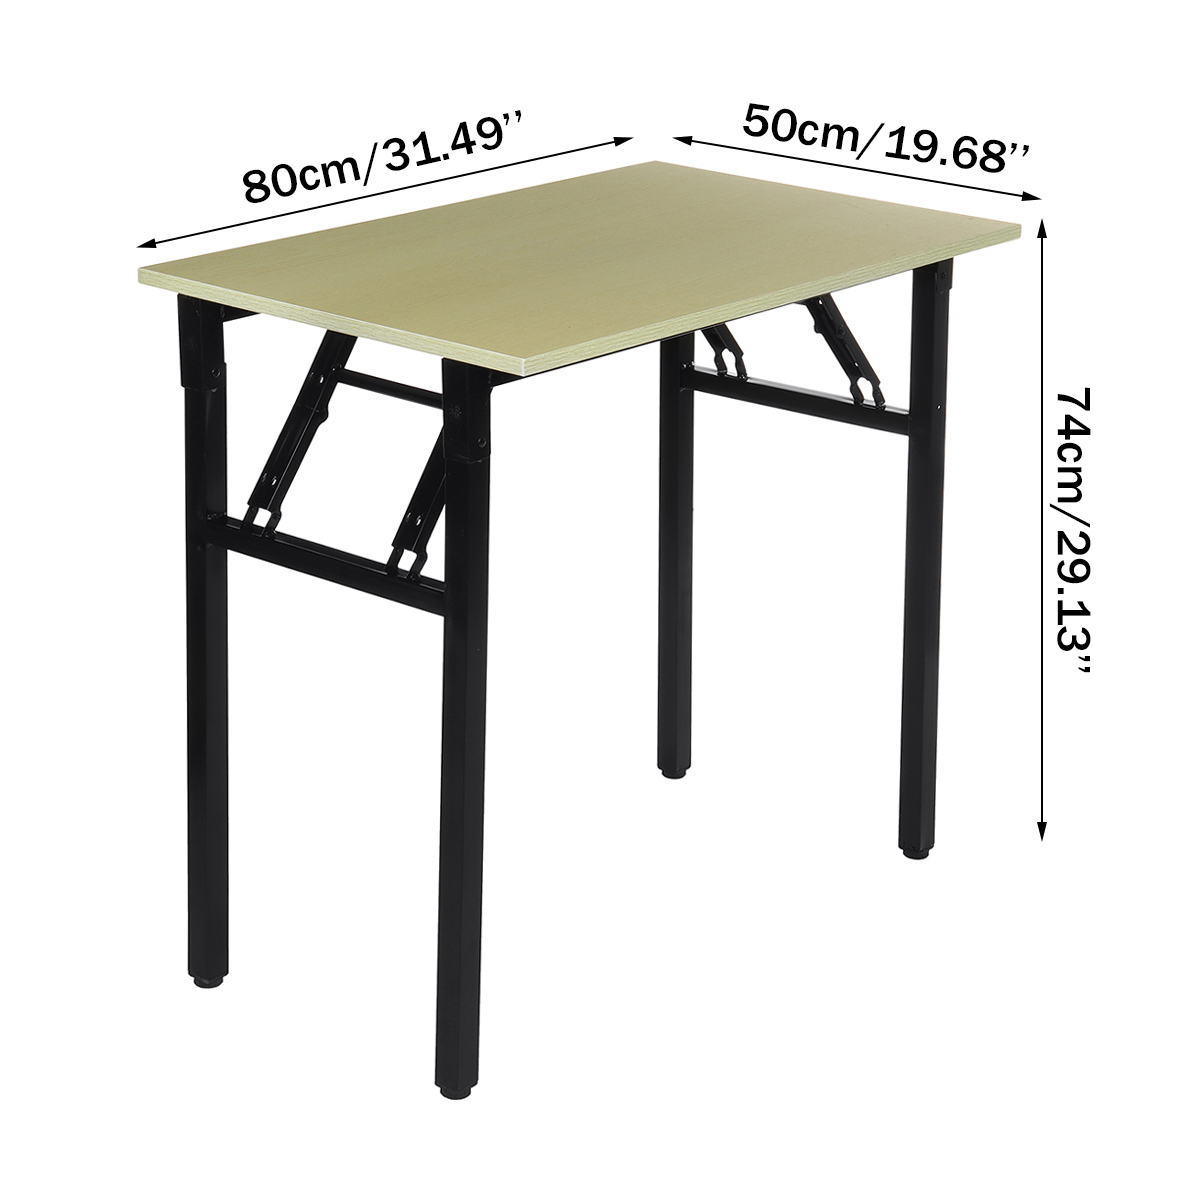 Foldable-Computer-Laptop-Desk-Writing-Study-Table-Desktop-Workstation-Home-Office-Furniture-1750804-4